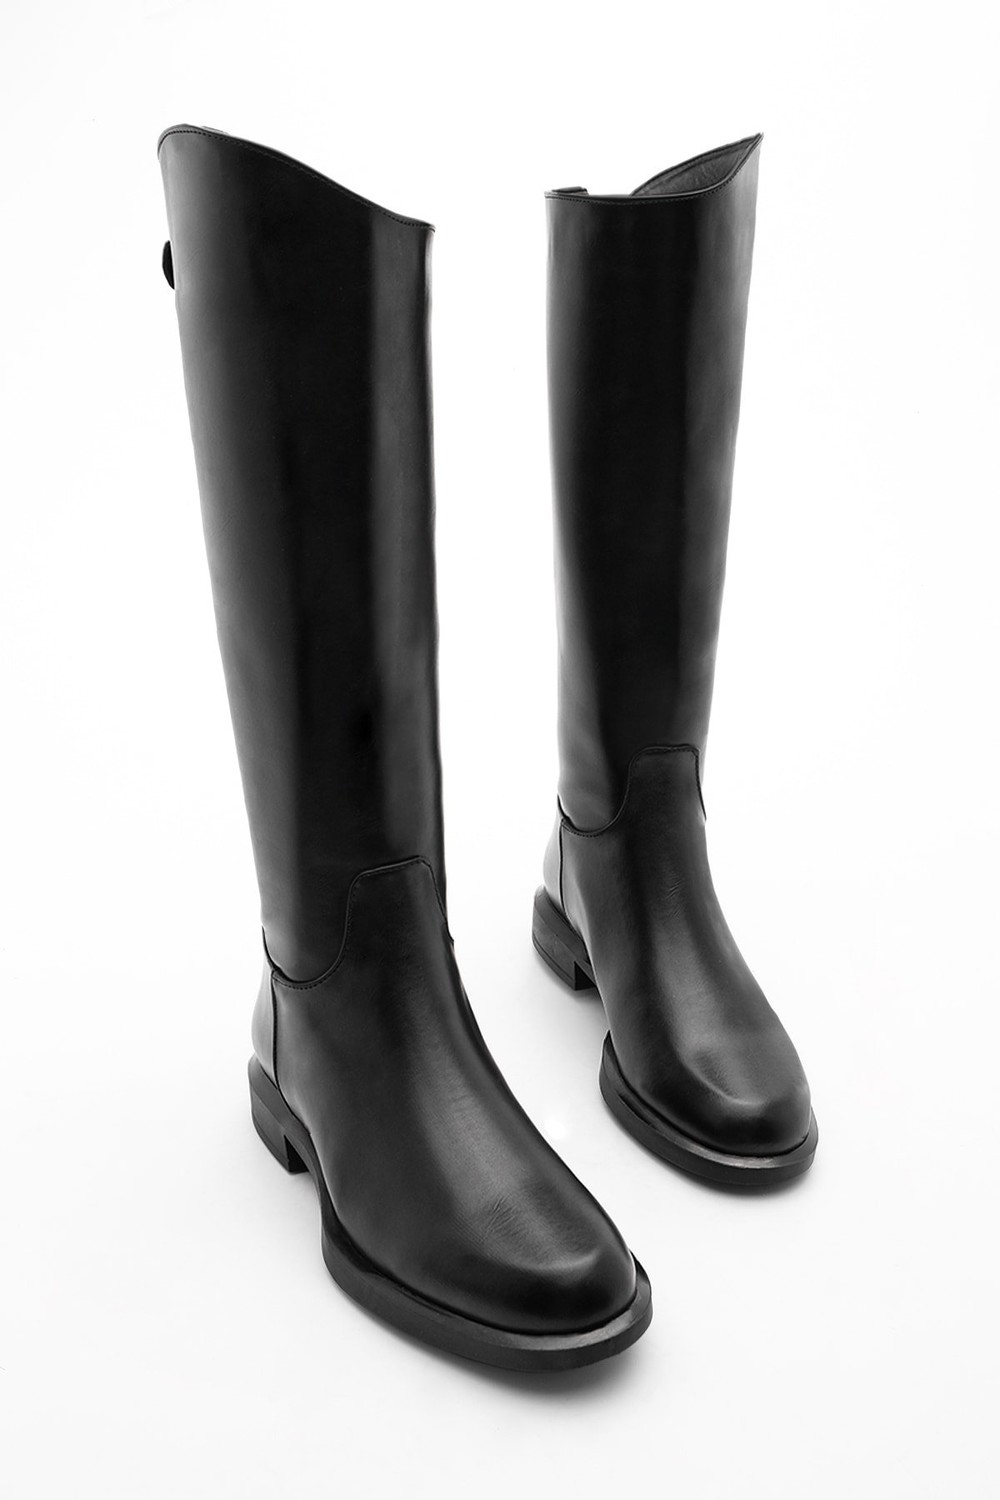 Marjin Women's Daily Boots Knee Length Zipper At The Back Milana Black